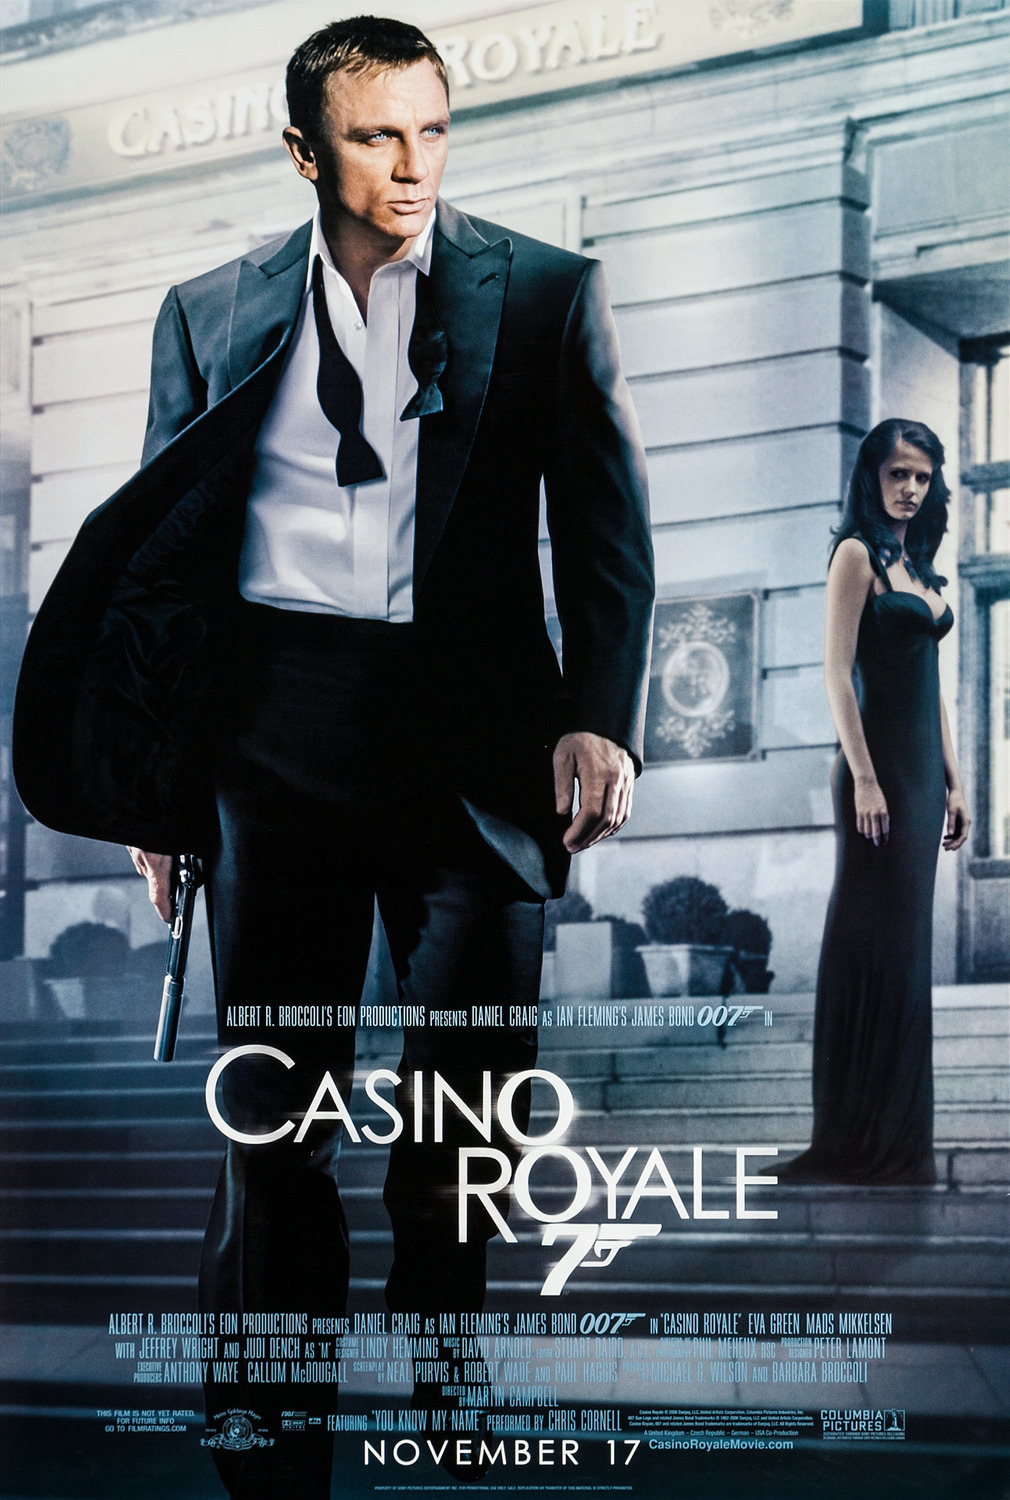 cast of casino royale movie